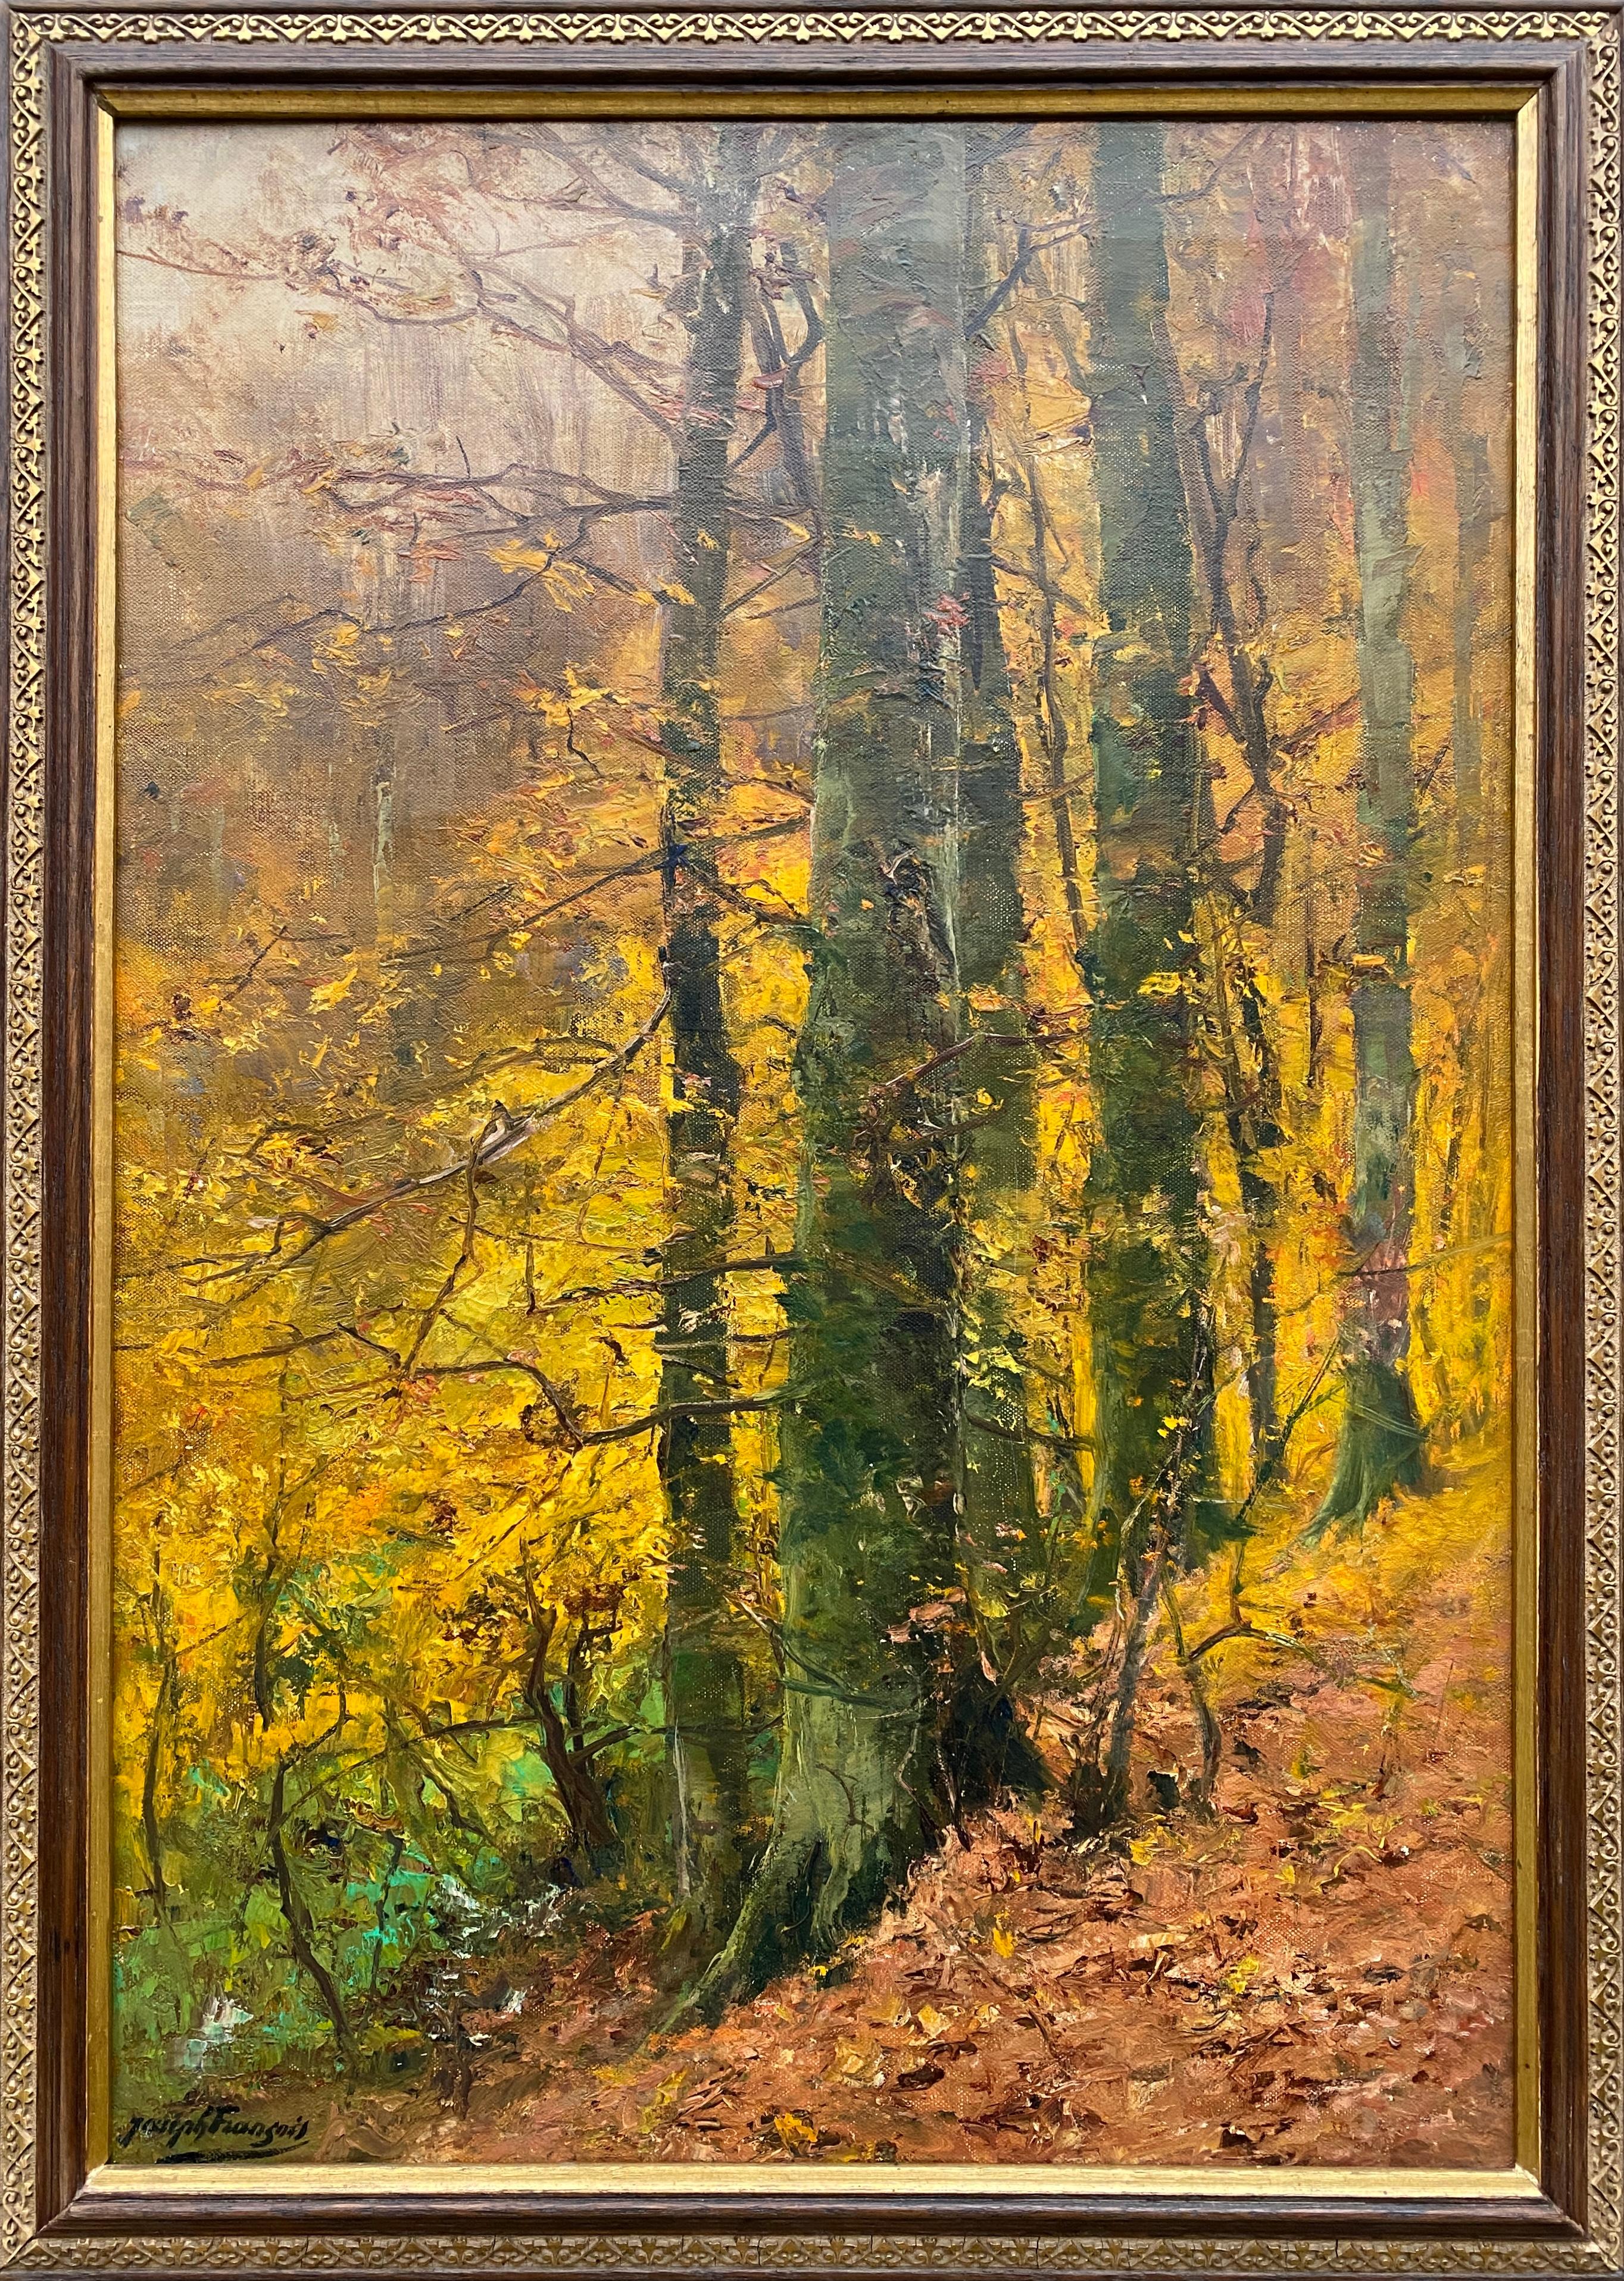 Francois Joseph-Charles Figurative Painting - Autumn Forest Scene, Joseph-Charles Francois, Brussels 1851 – 1940, Signed